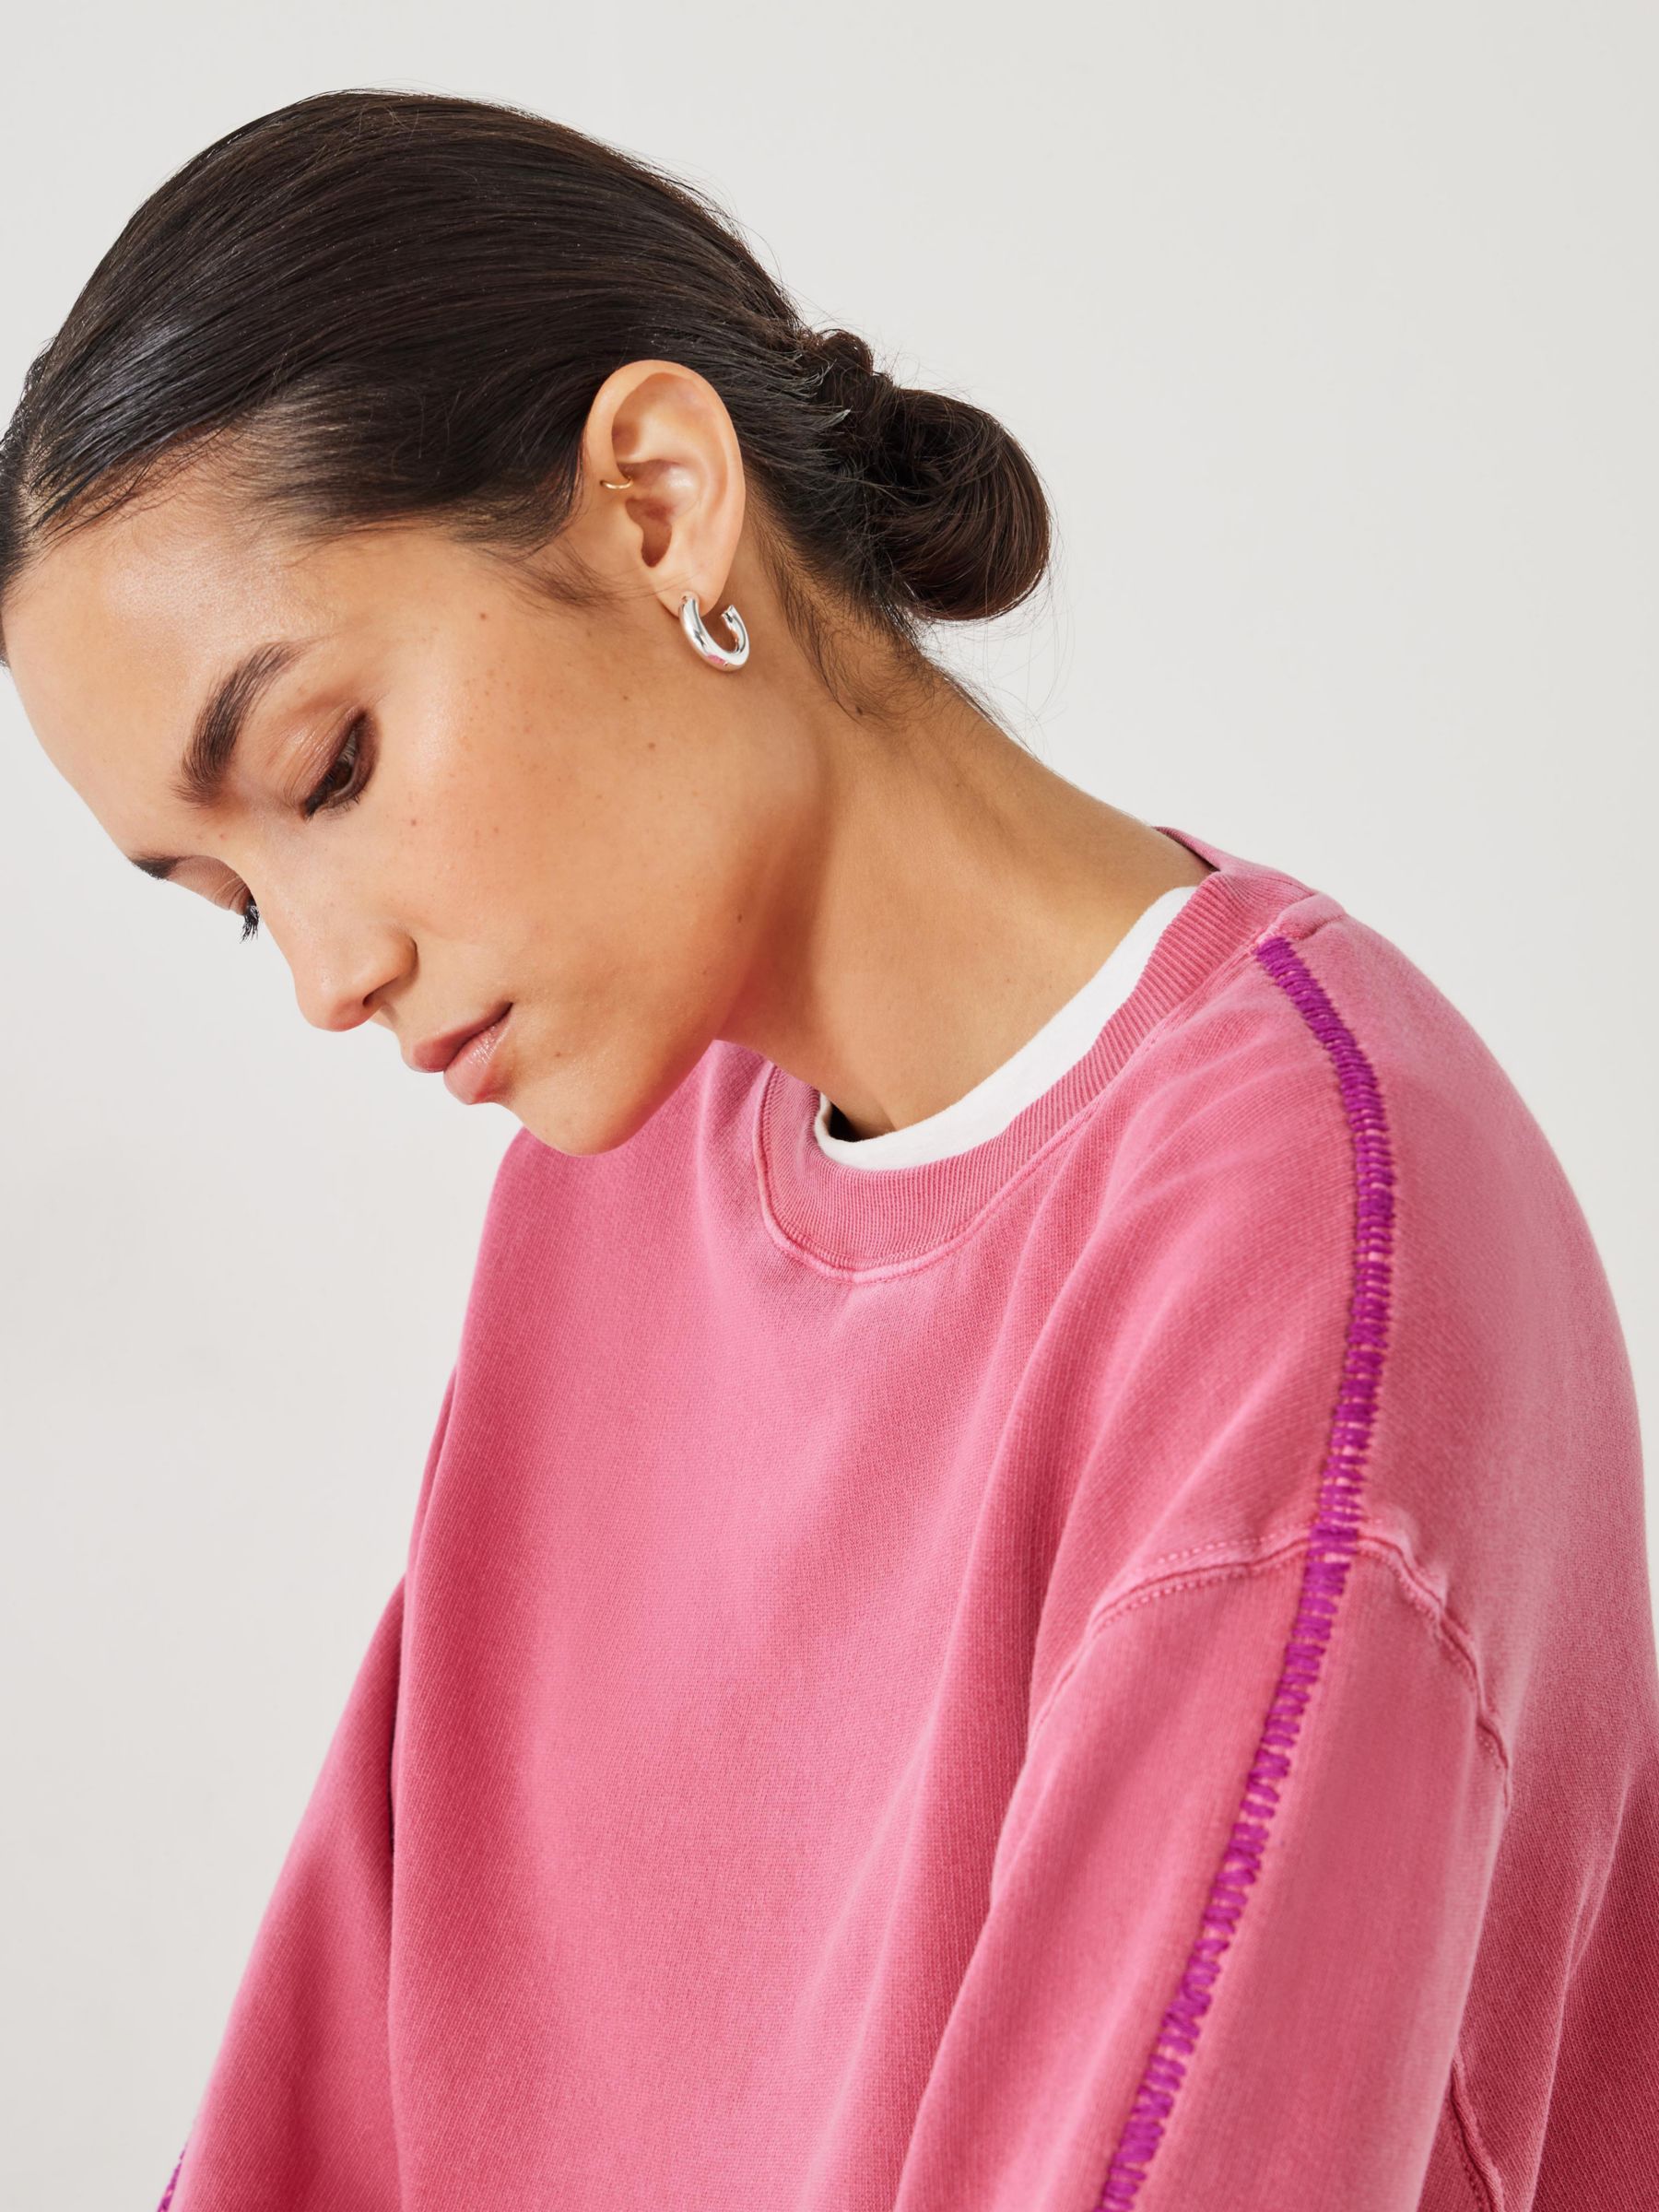 HUSH Contrast Stitch Detail Sweatshirt, Bright Pink at John Lewis ...